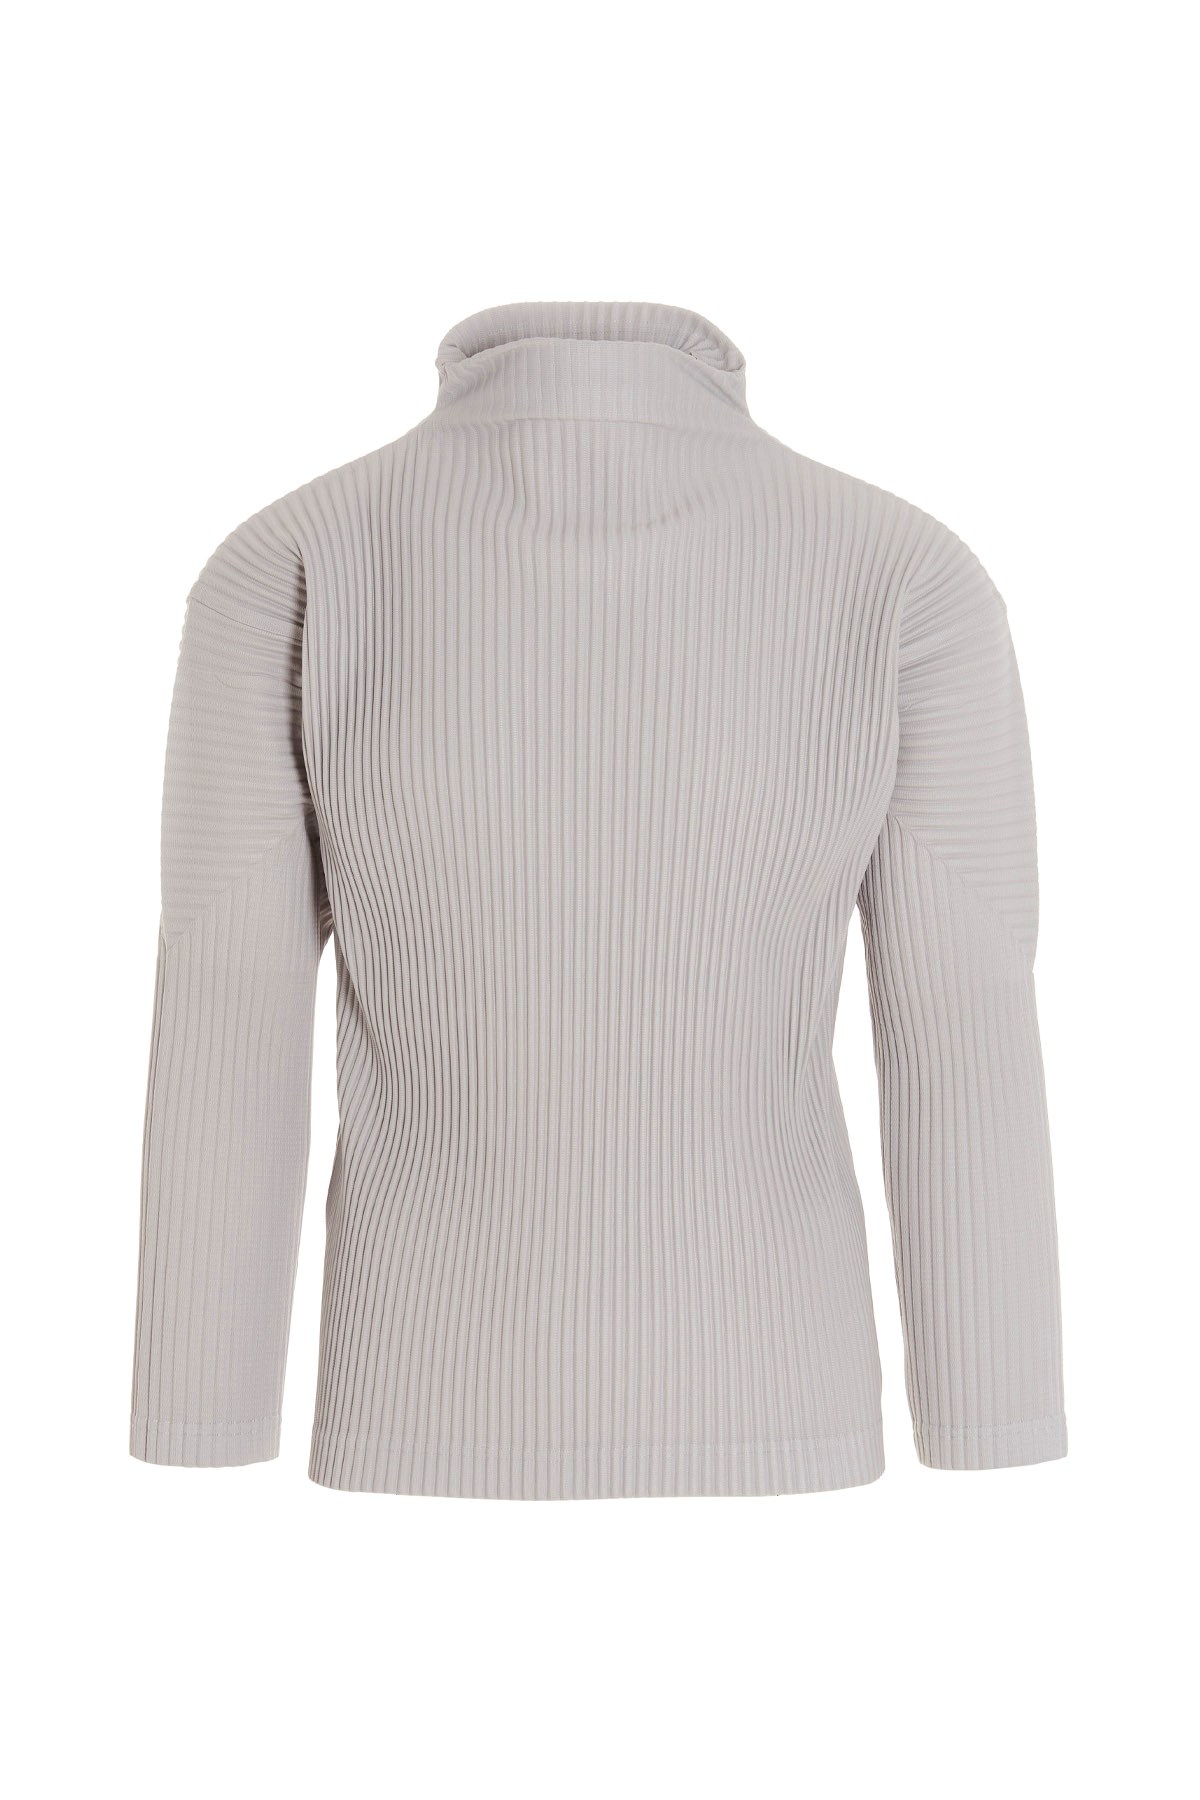 HOMME PLISSE' ISSEY MIYAKE 'Basics Plissé’ Turtleneck Sweater